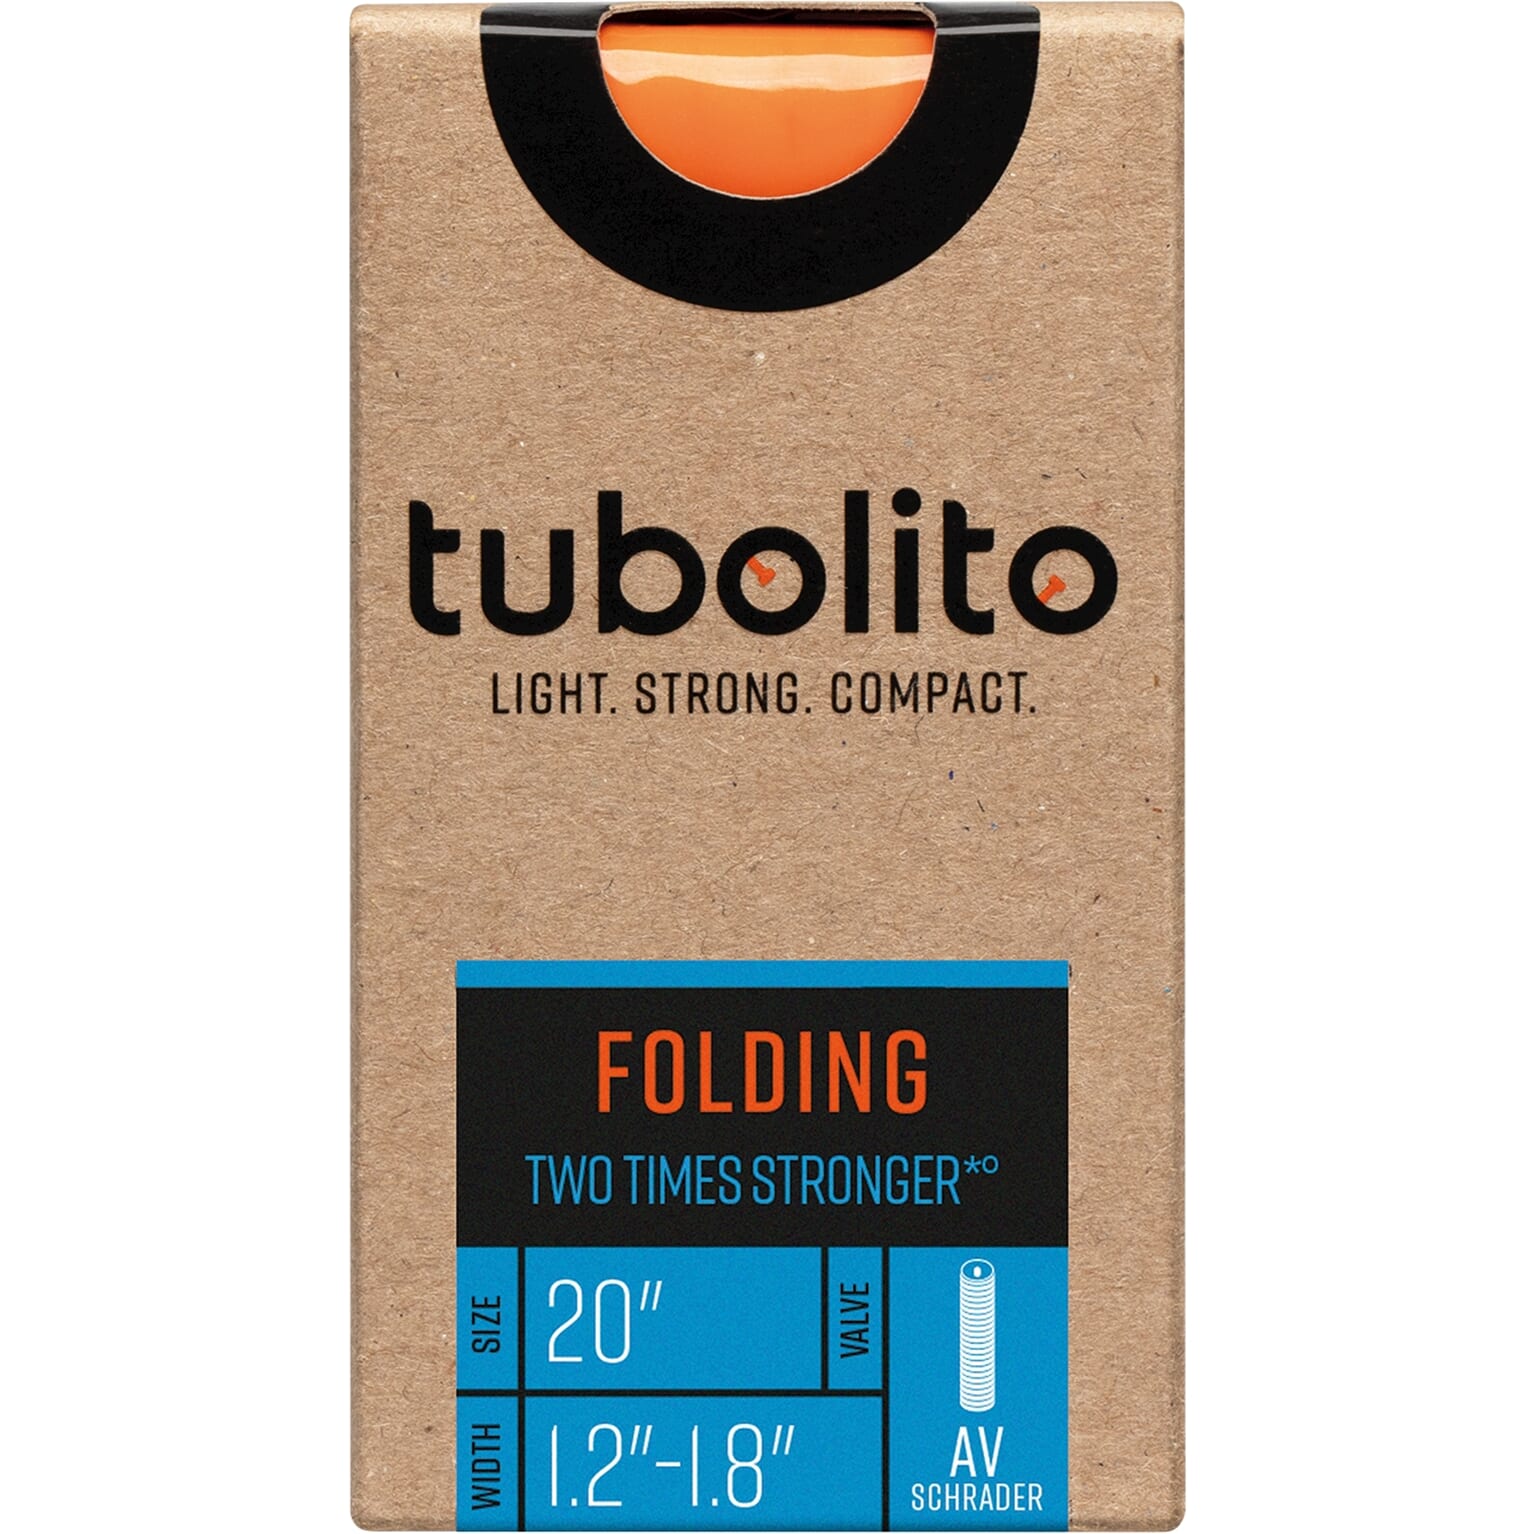 Tubolito Bnb Folding 20 x 1.2 1.8 av 40mm